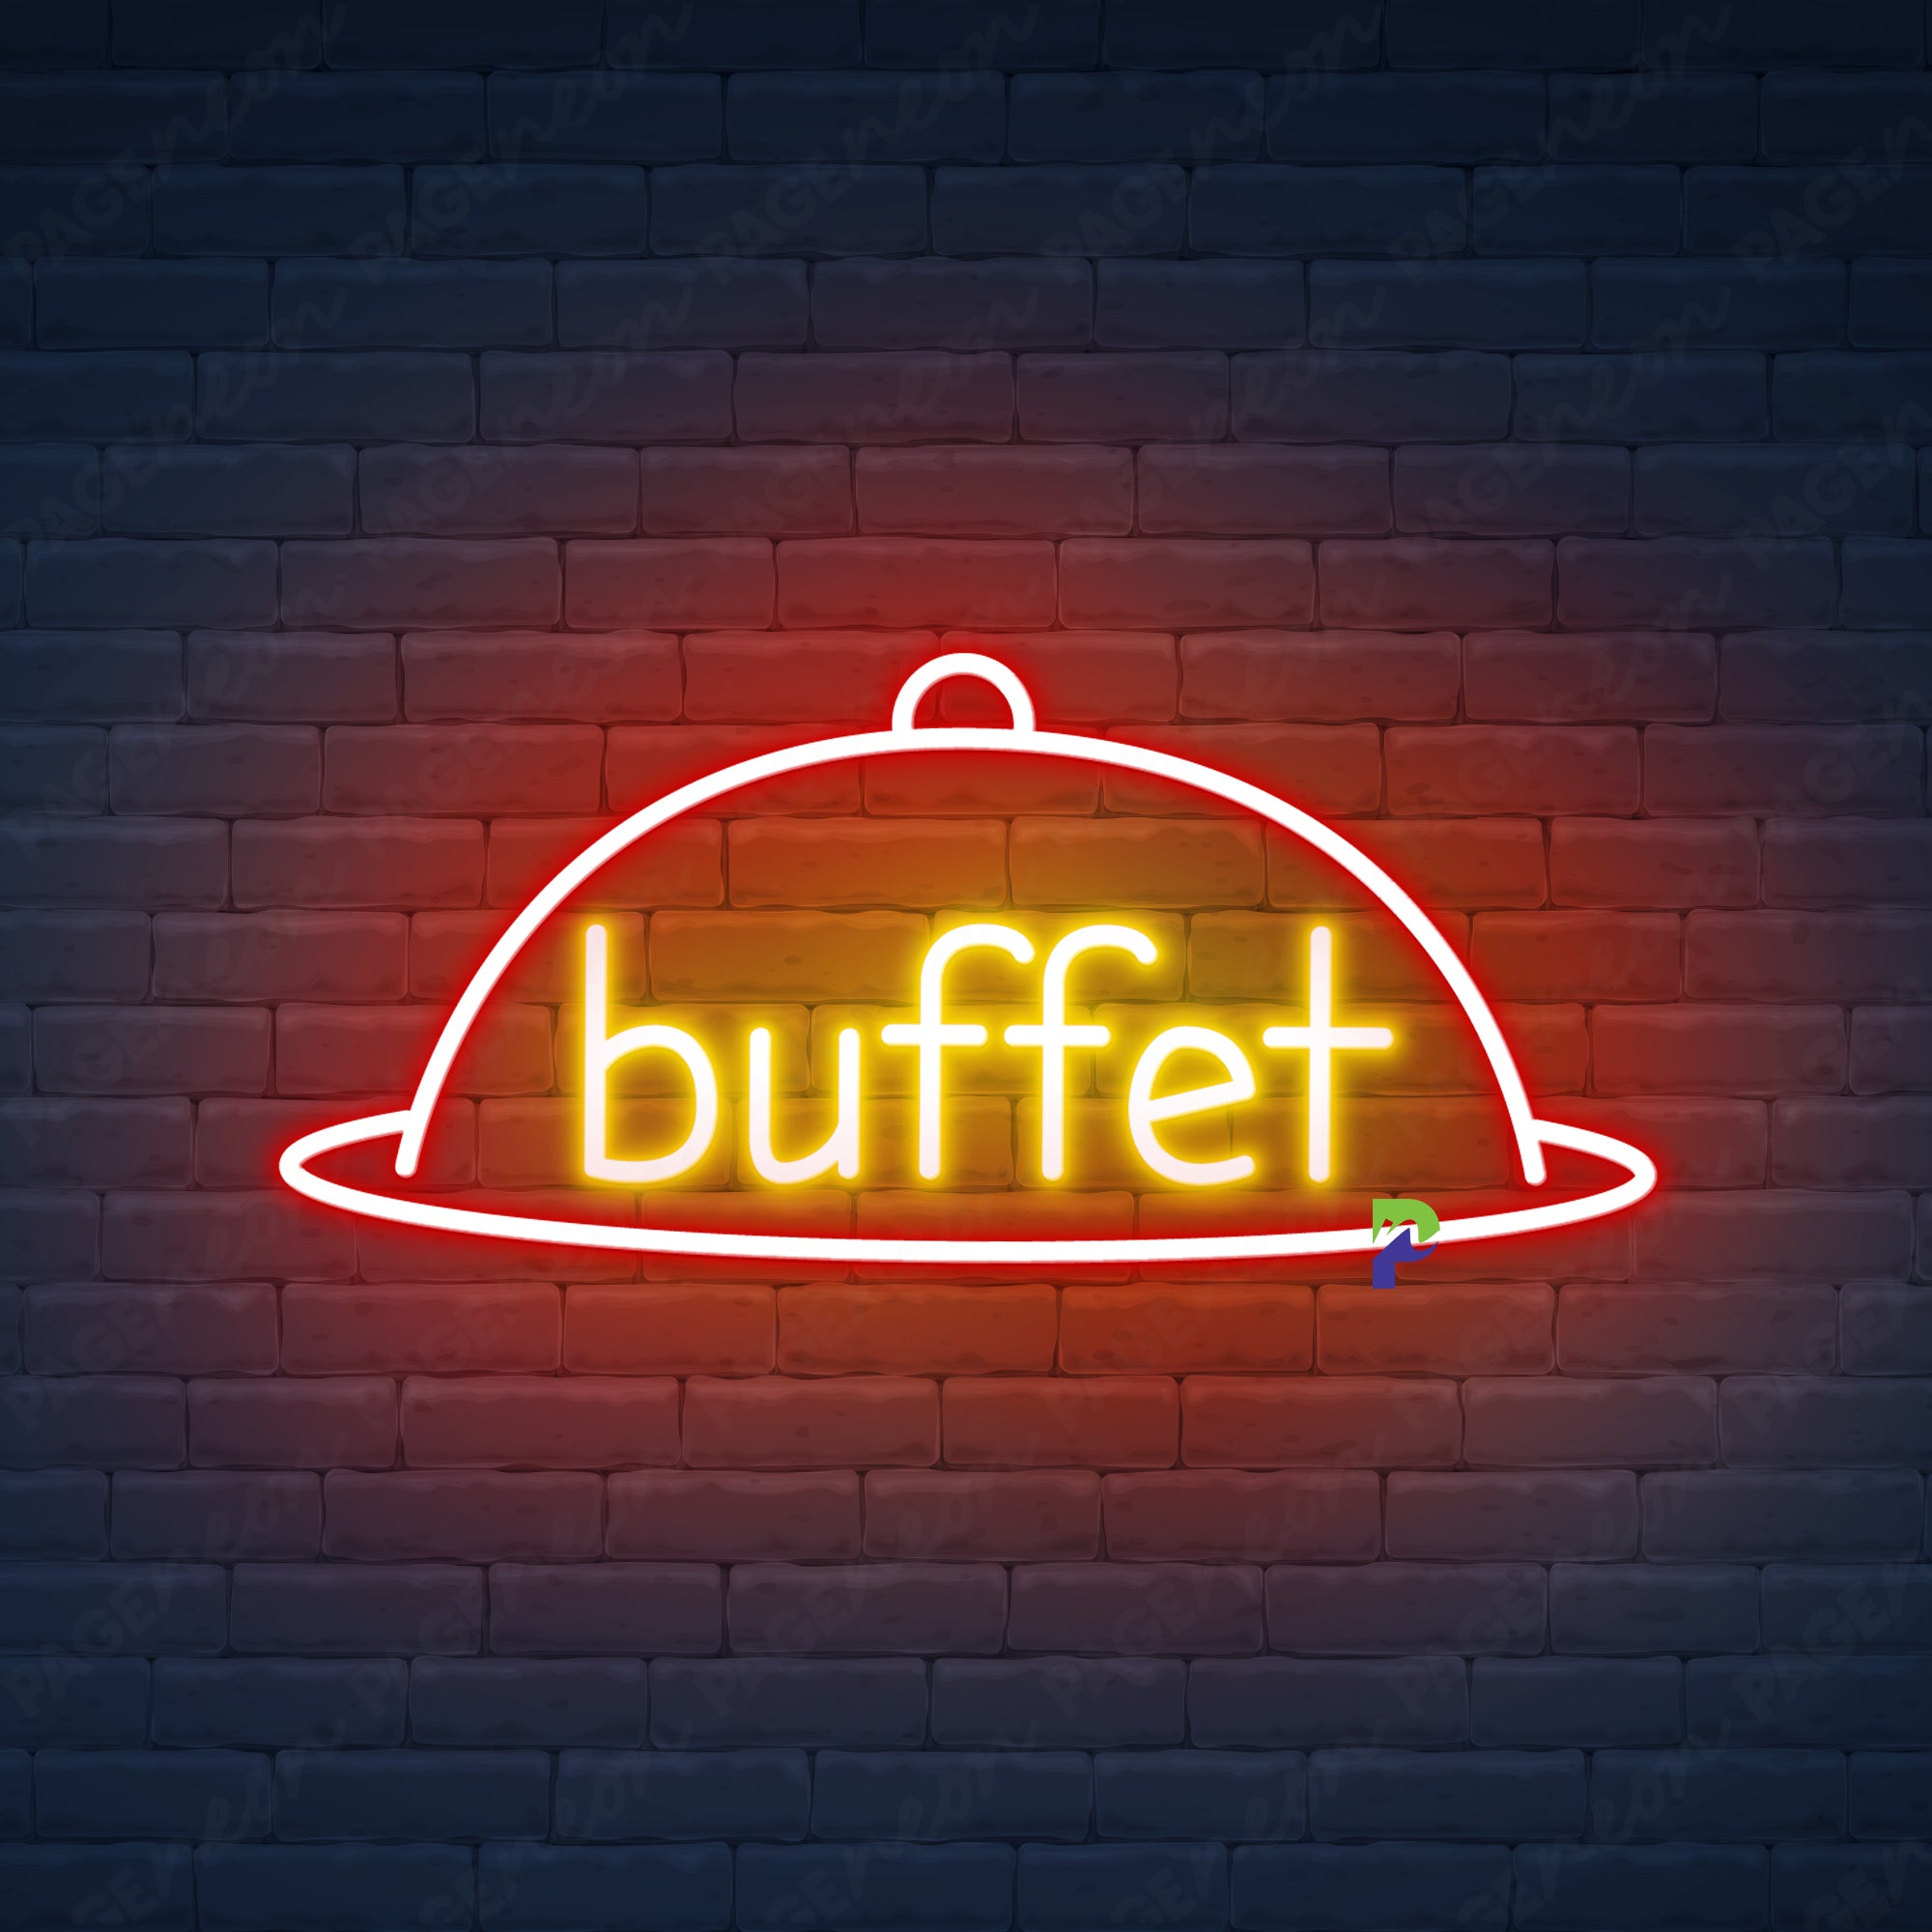 Buffet Neon Sign Business Big Led Light